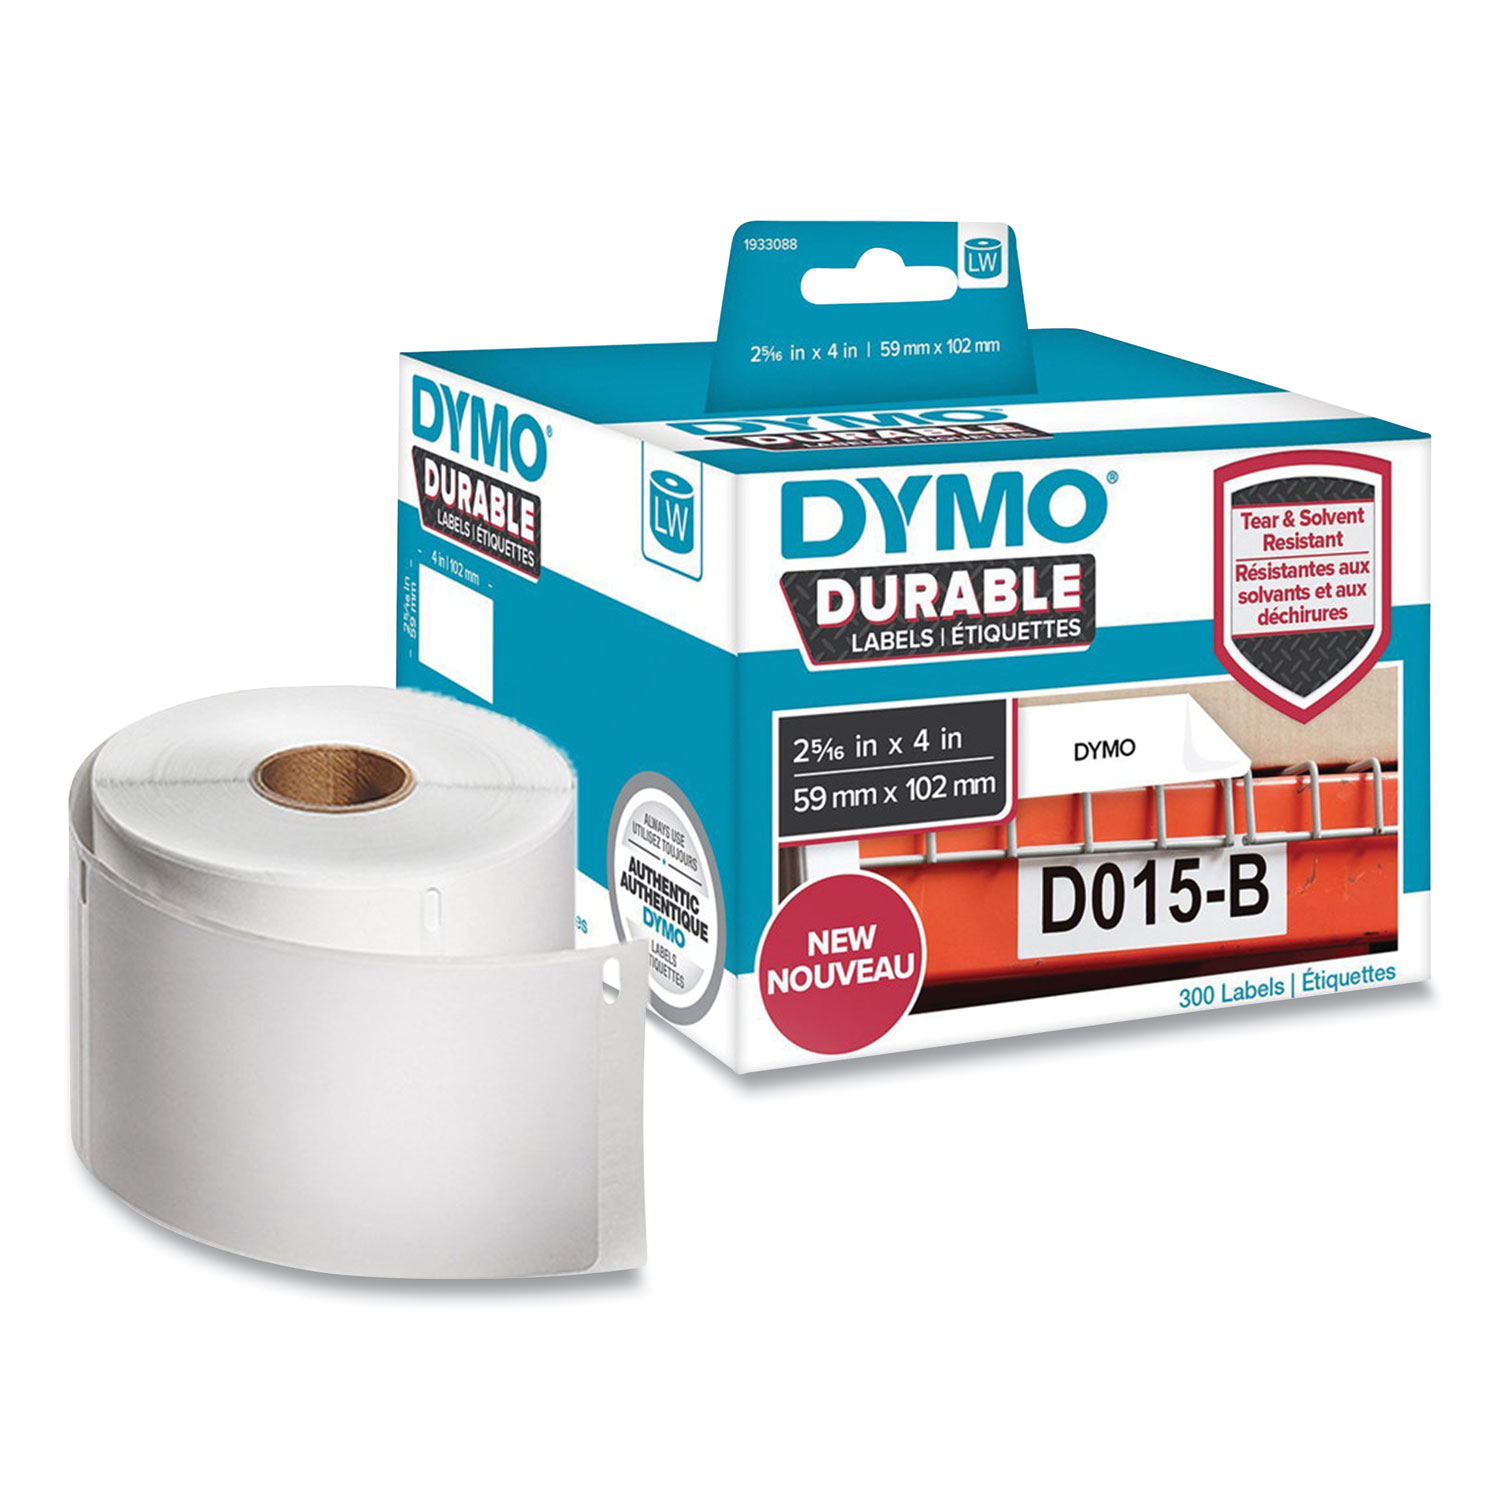  DYMO 1933088 LW Durable Multi-Purpose Labels, 2.31 x 4, White, 300/Roll (DYM24403838) 